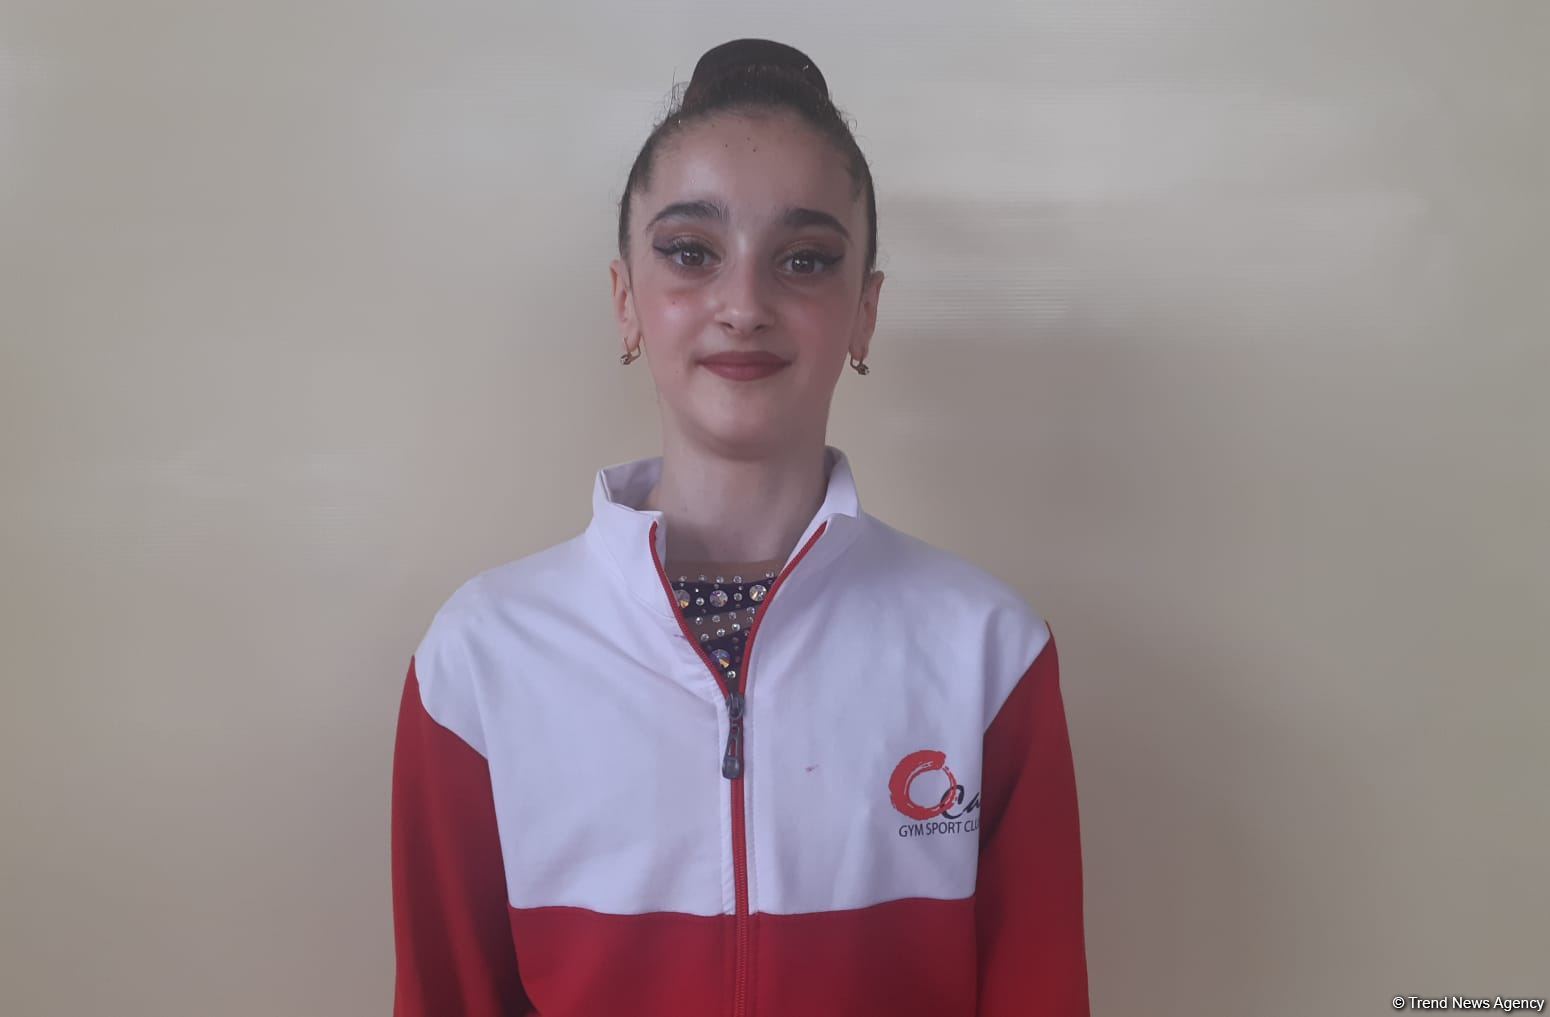 Student of Ojag Sport Club talks about her hard training for 1st Open Rhythmic Gymnastics Championship of Ojag Sport Club